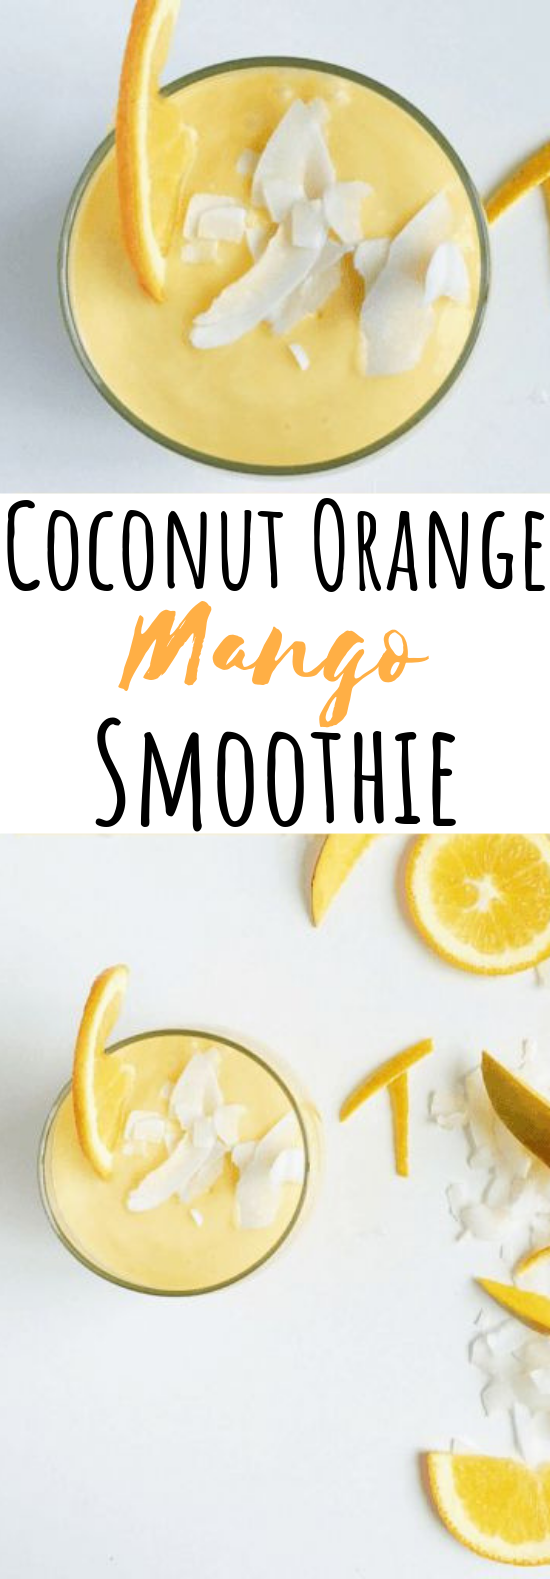 Coconut, Orange & Mango Smoothie #drinks #smoothies